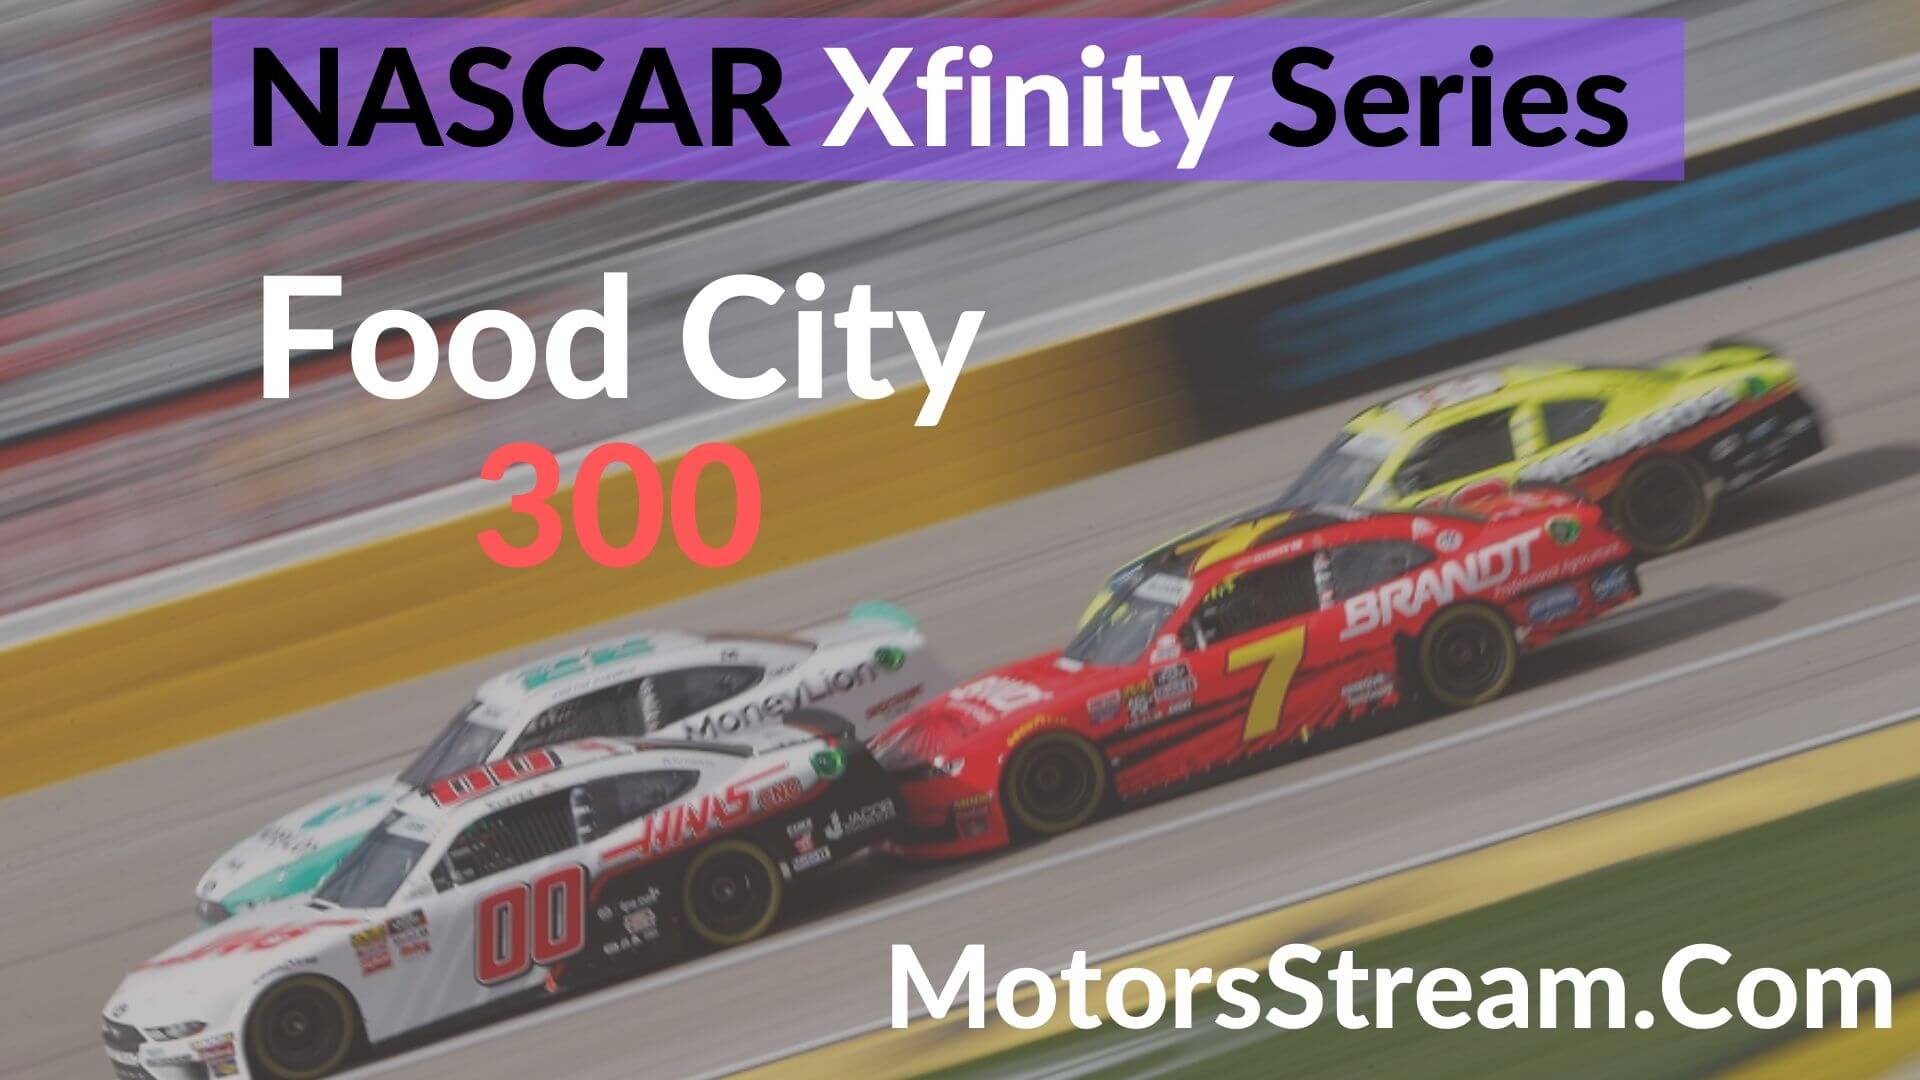 Food City 300 Live Stream NASCAR Xfinity Series